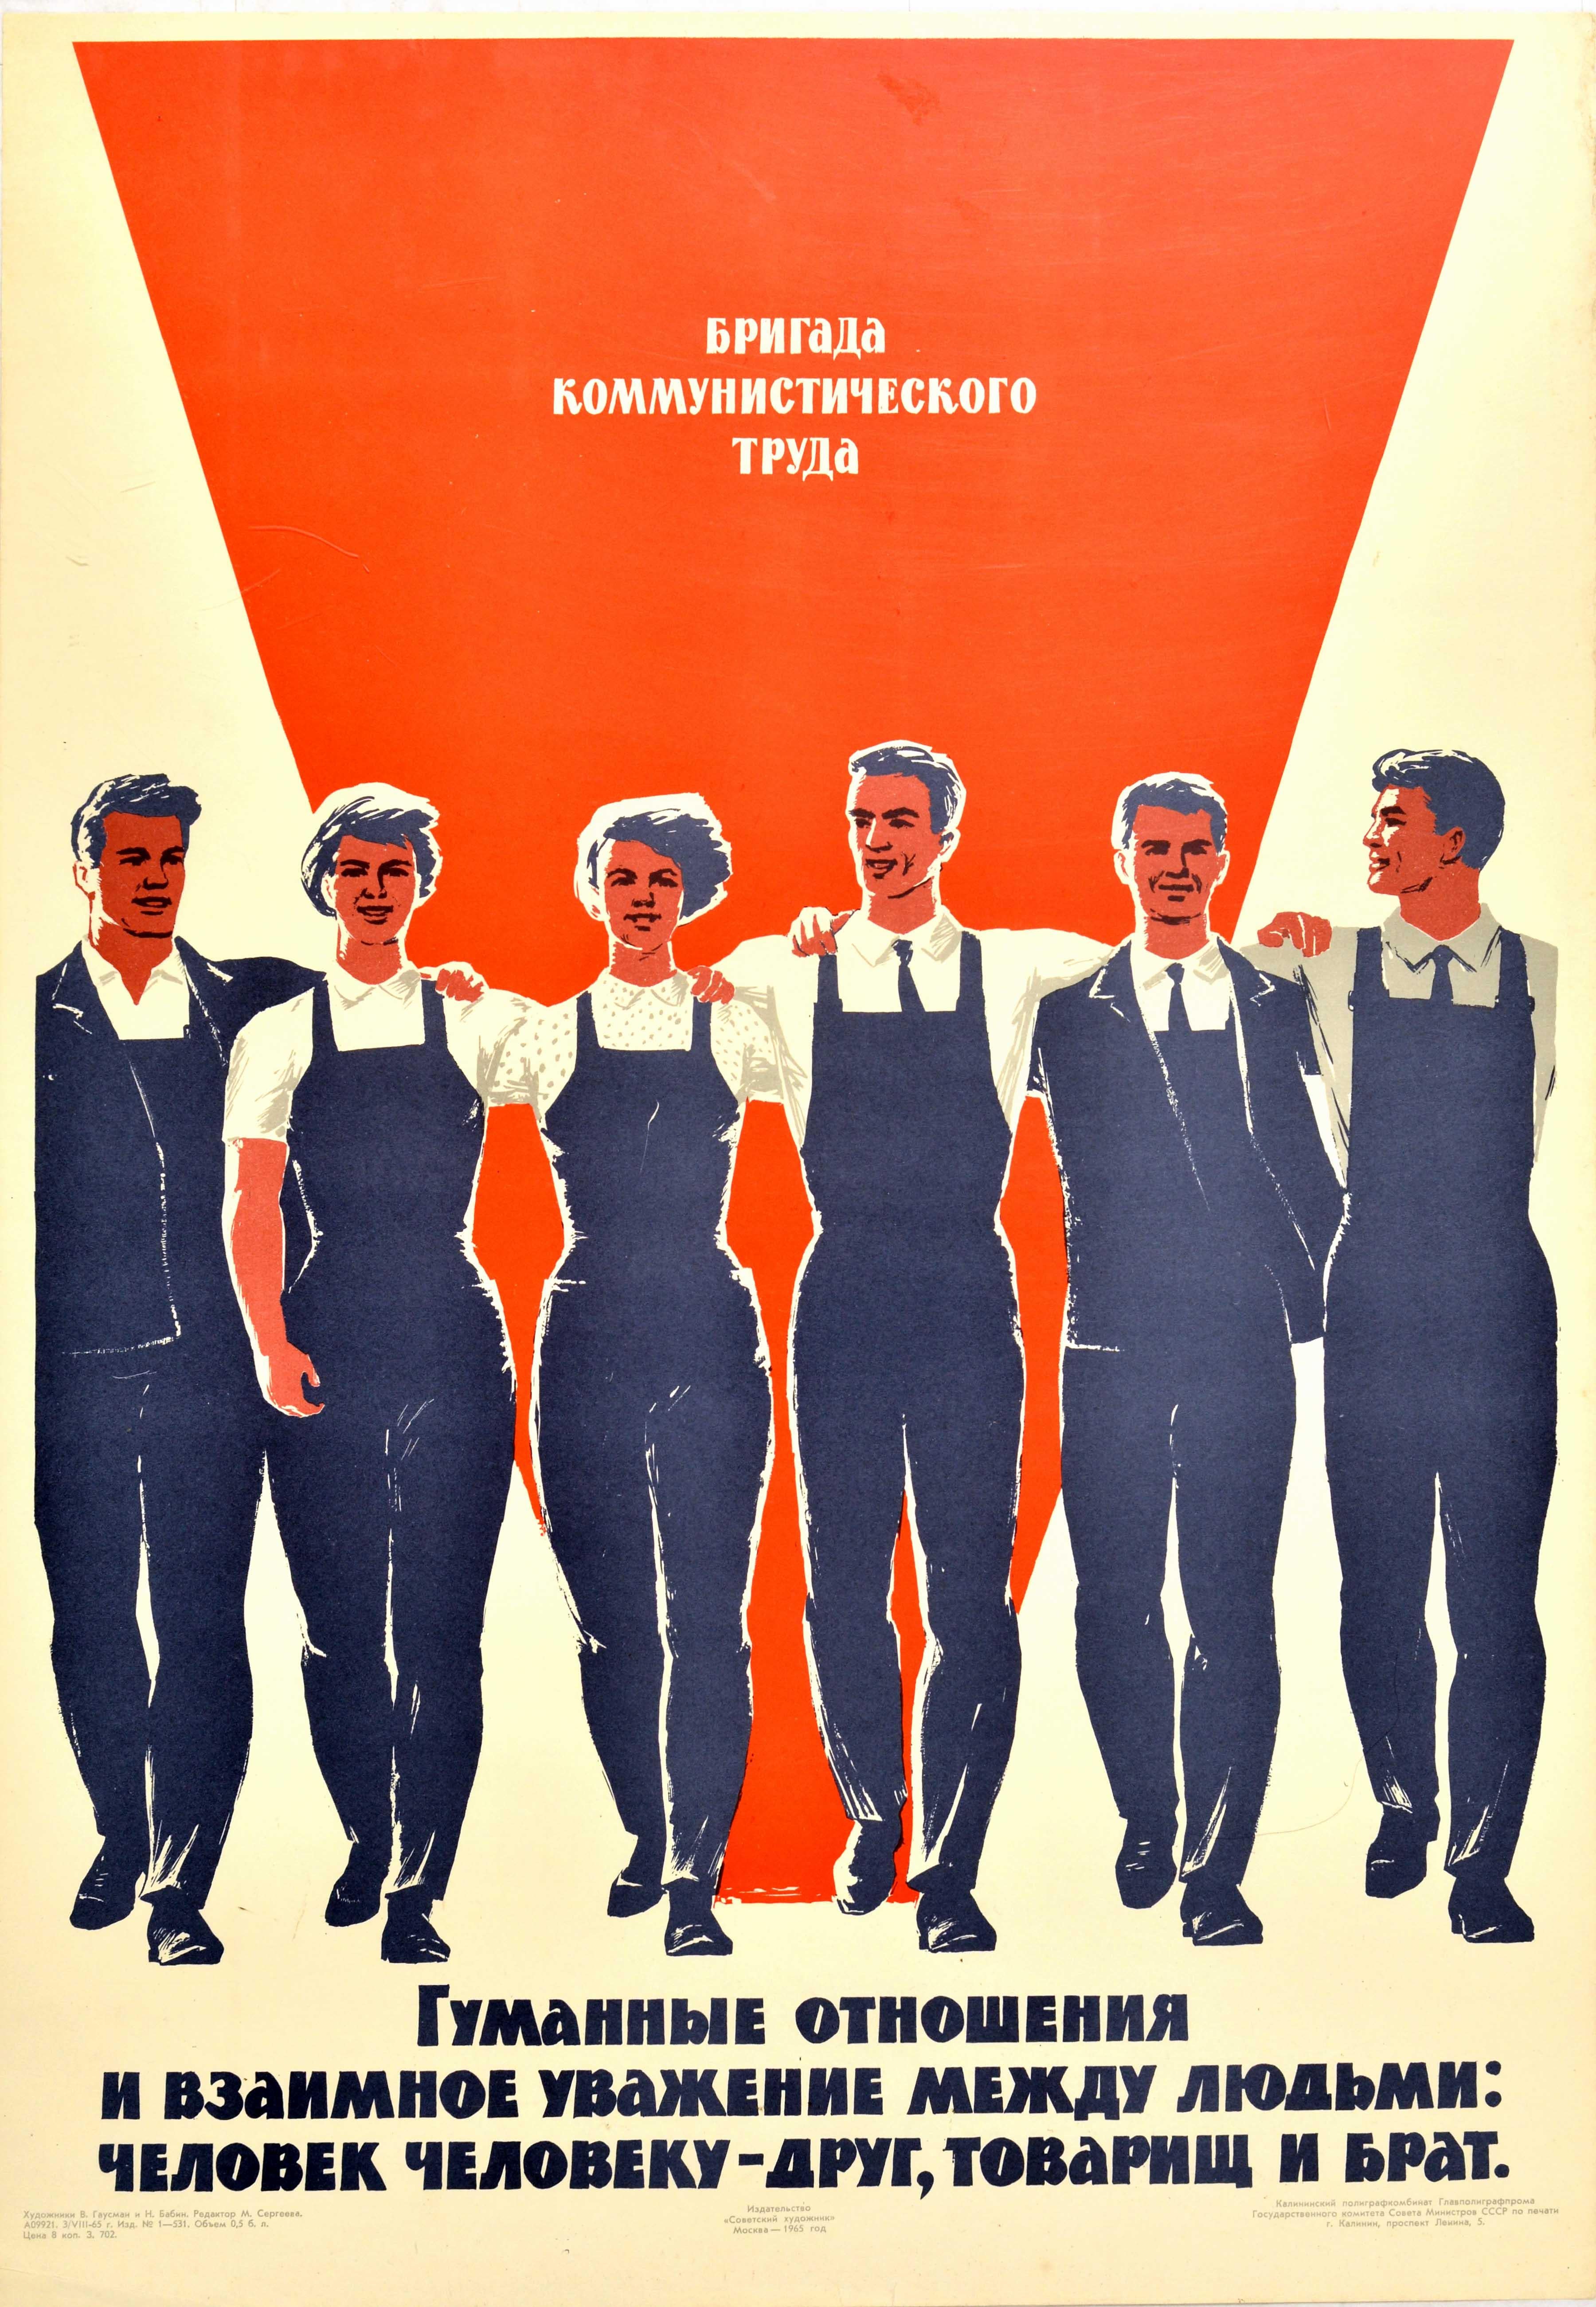 V. Gausman and N. Babin Print - Original Vintage Soviet Poster Workers Team Respect Comrade Workplace Motivation